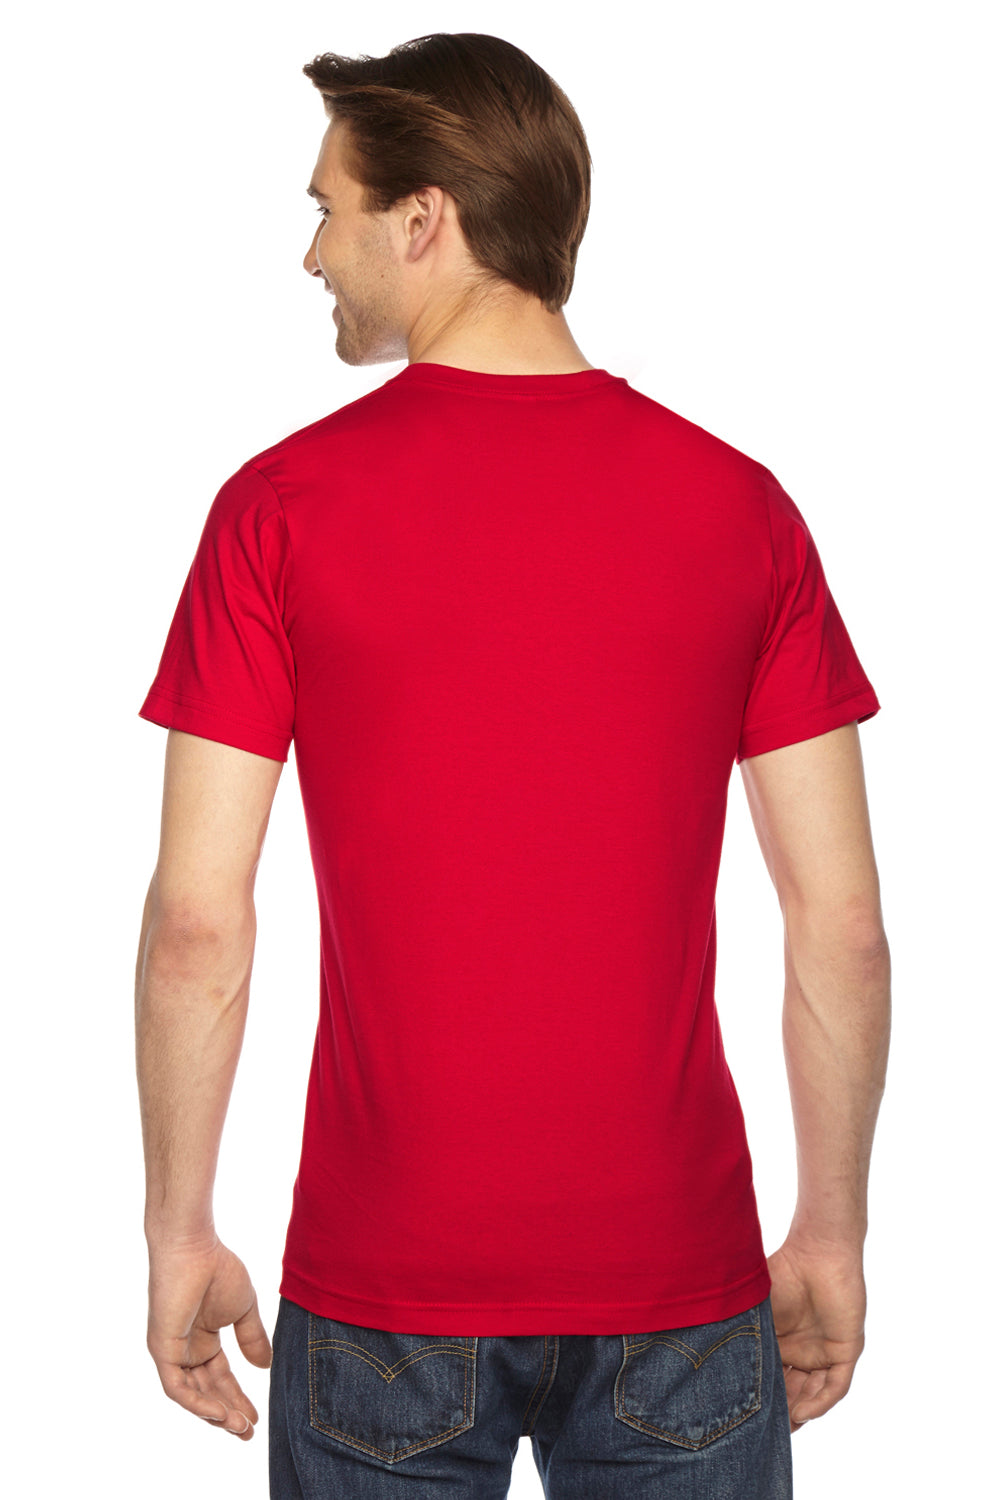 American Apparel 2001 Mens USA Made Fine Jersey Short Sleeve Crewneck T-Shirt Red Back